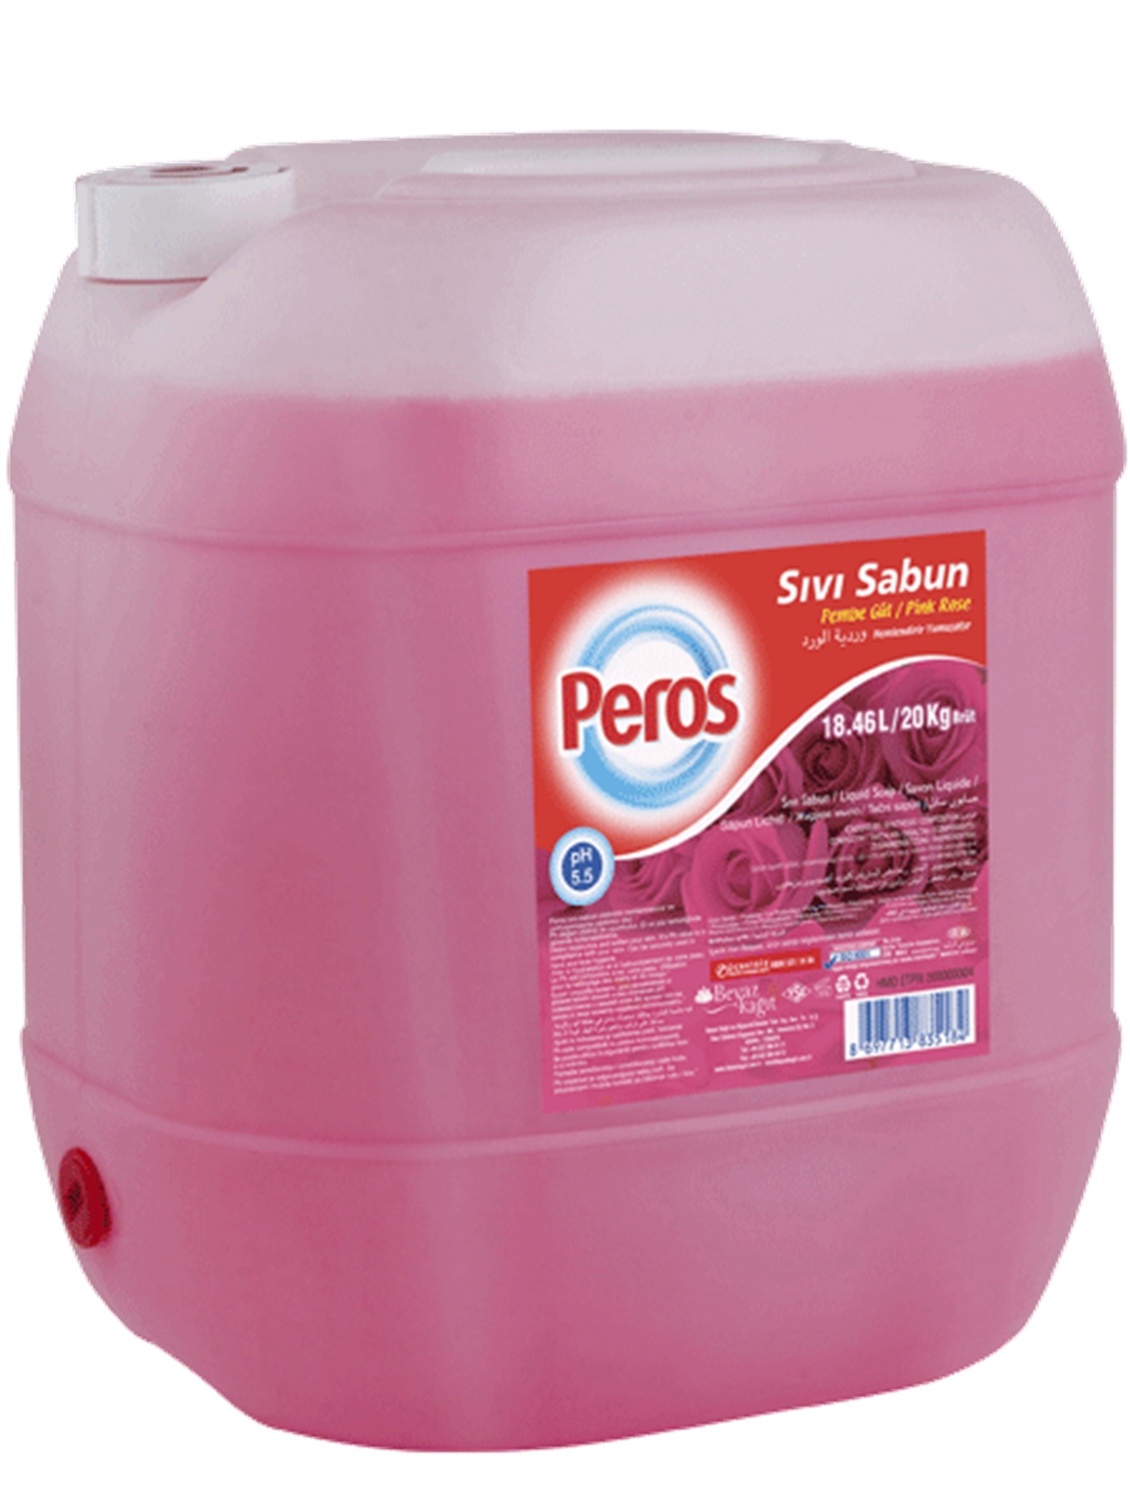 Peros Sıvı Sabun Pembe 20 kg - Onur Market